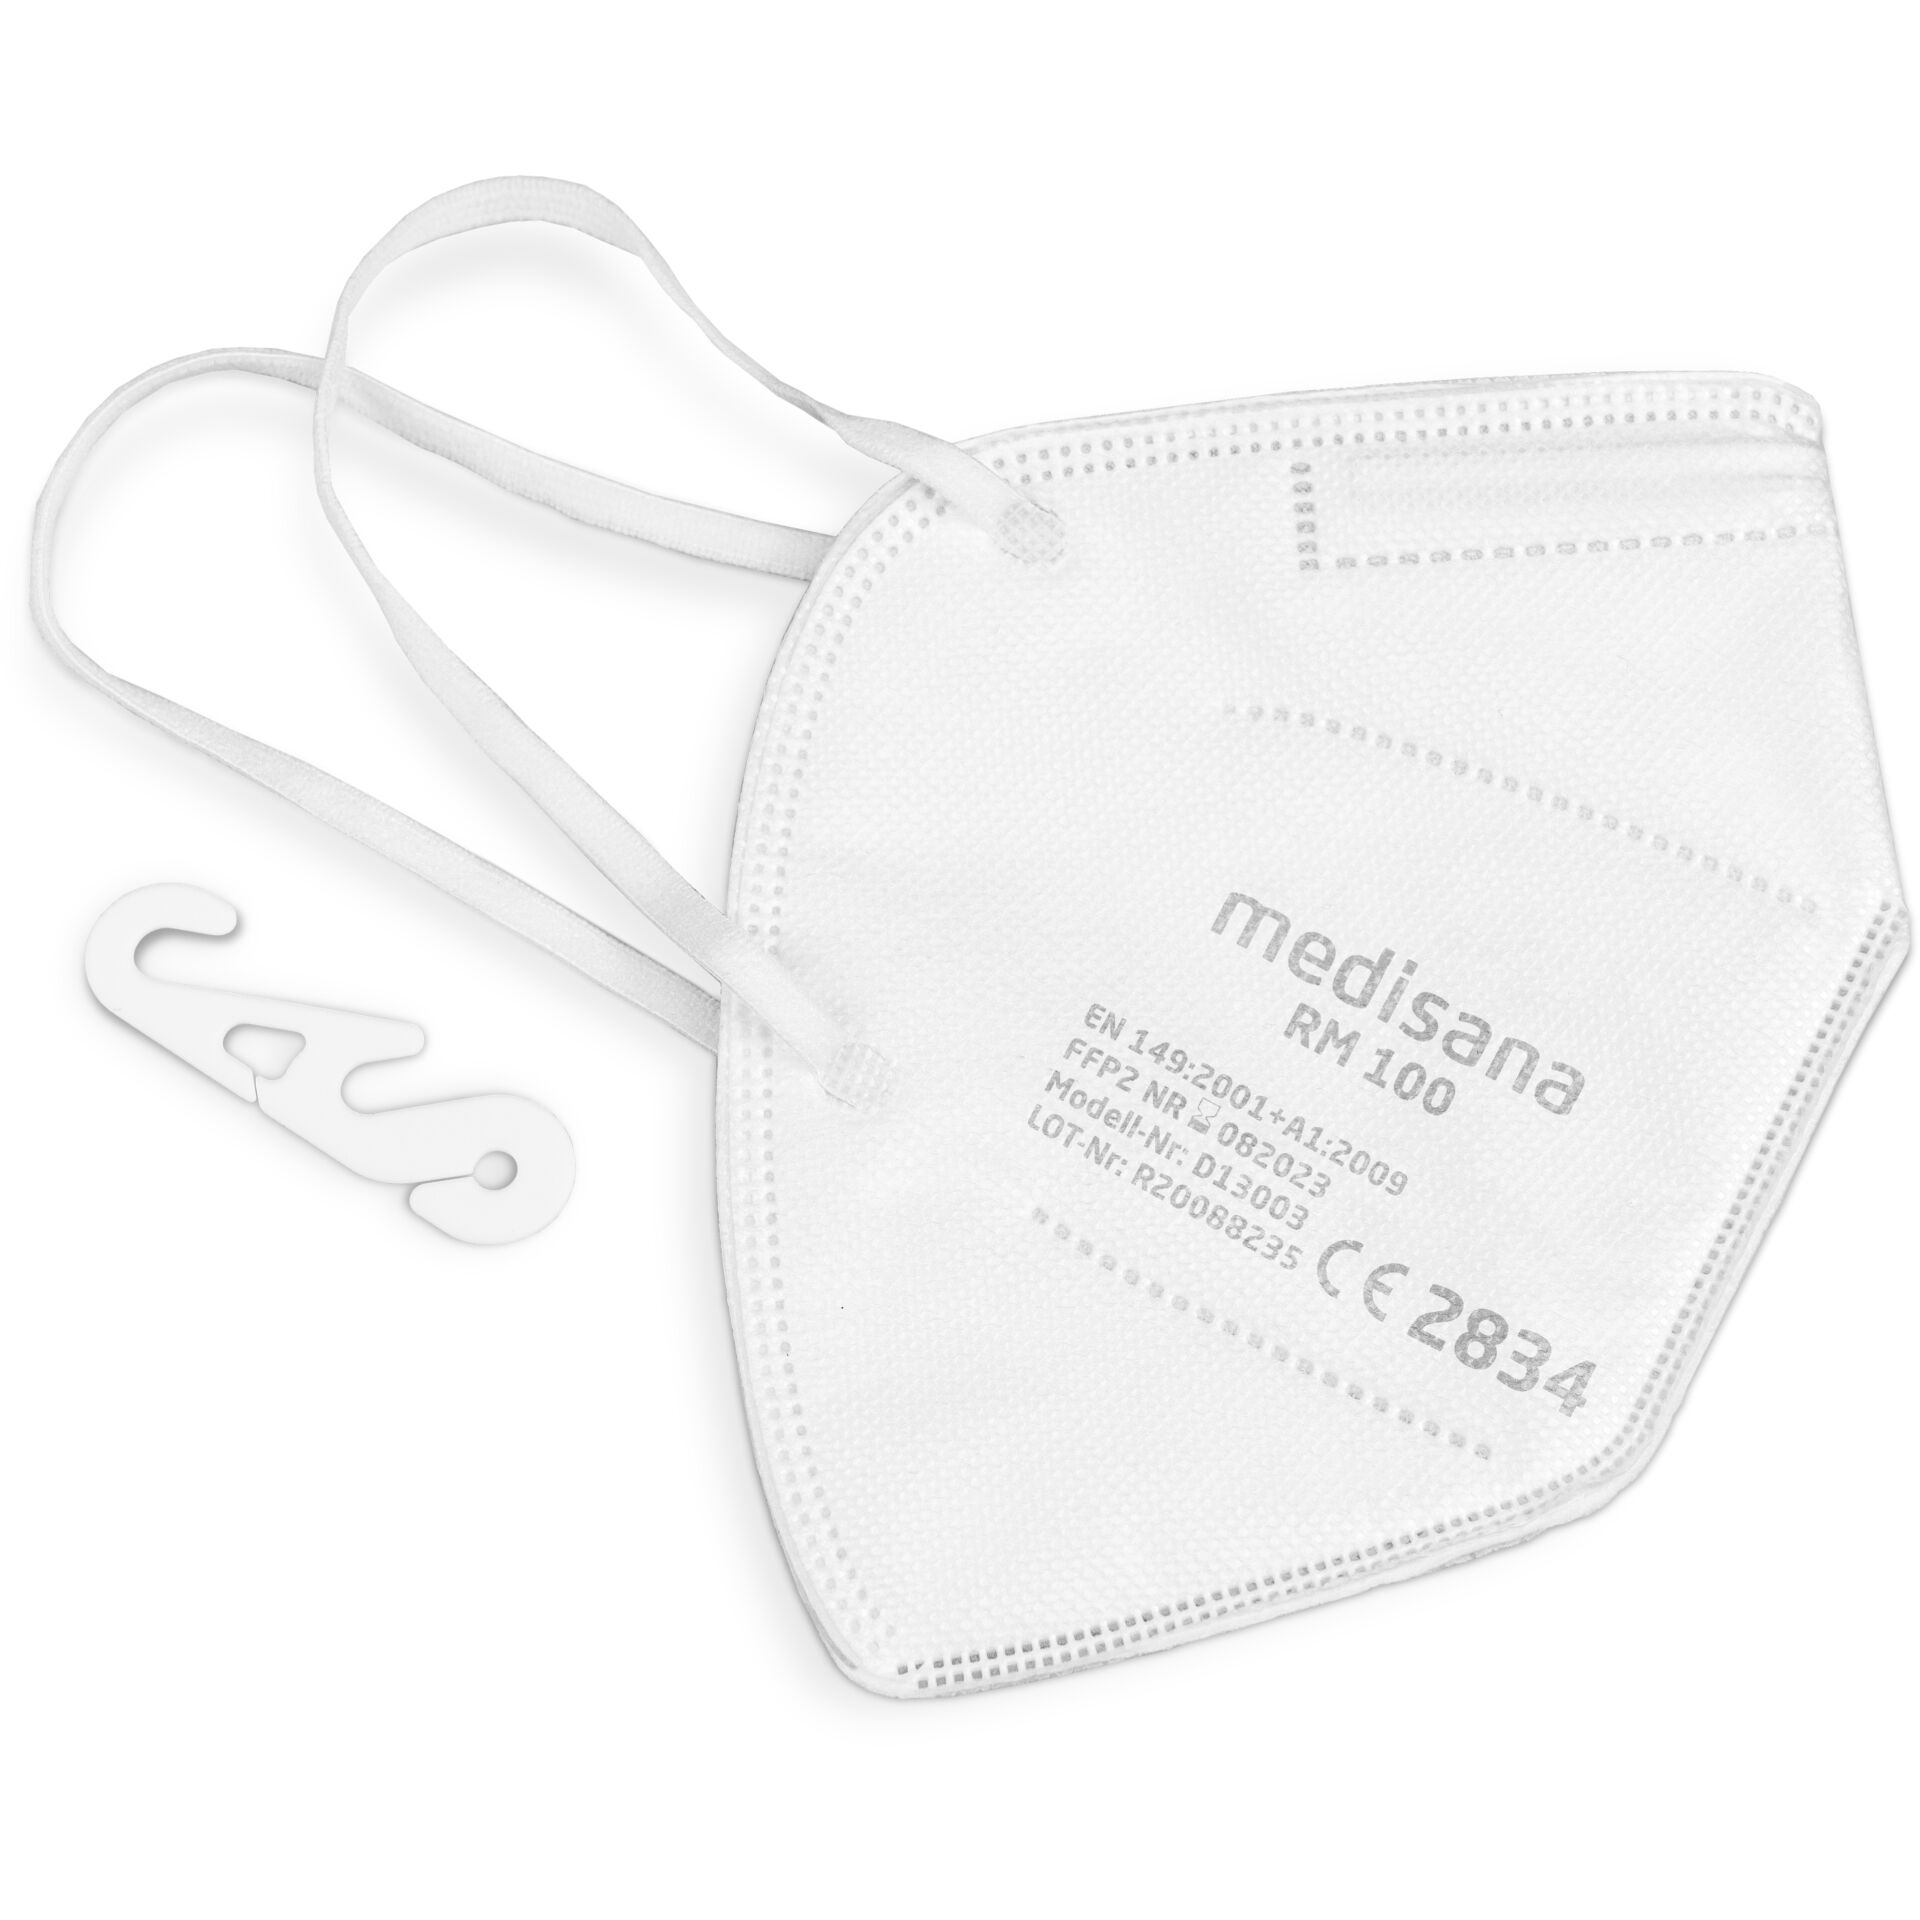 Medisana 100 Hardware/Electronic Atemschutzmaske X FFP2 -Medisana -RM 10